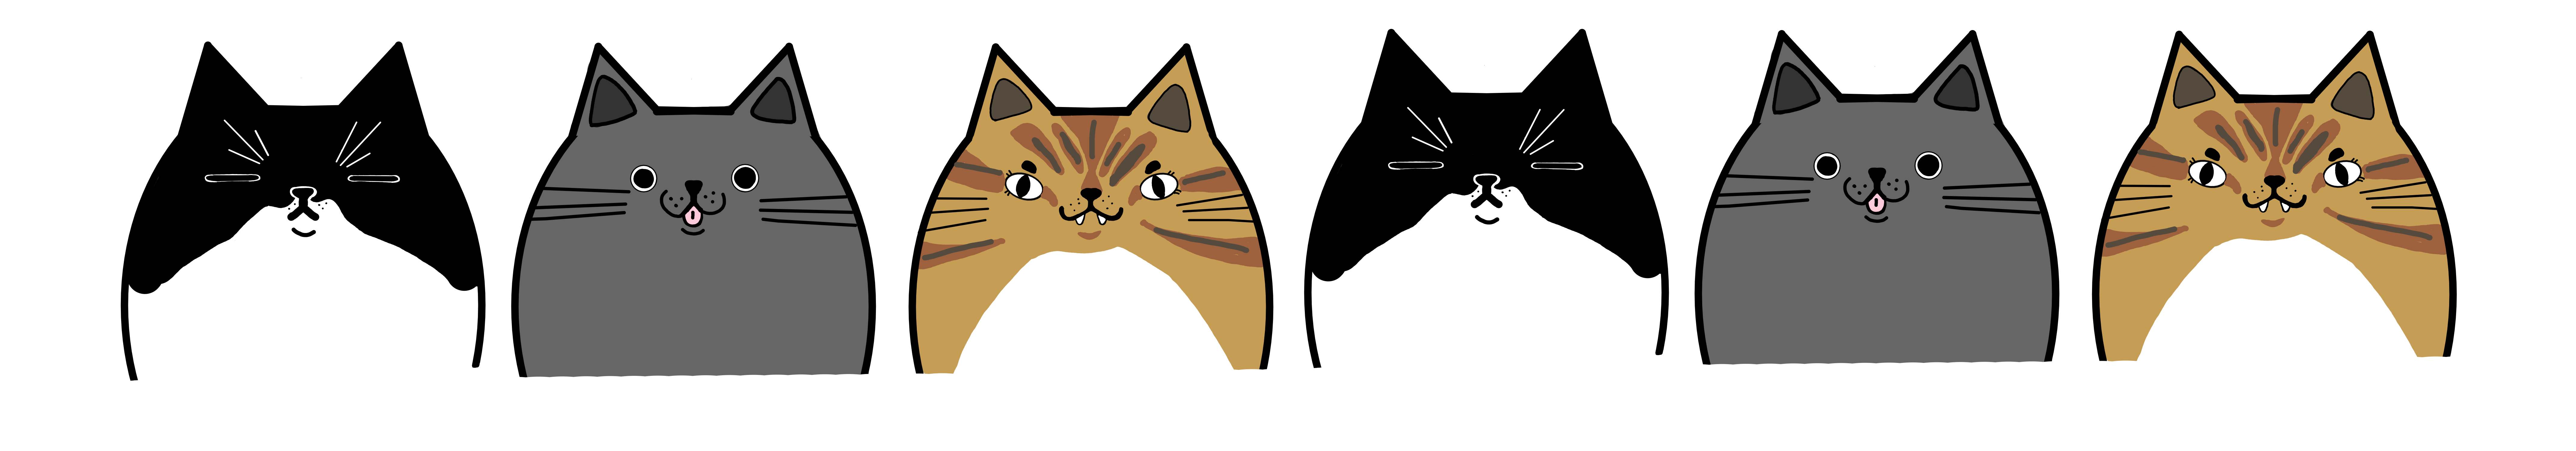 cat banner